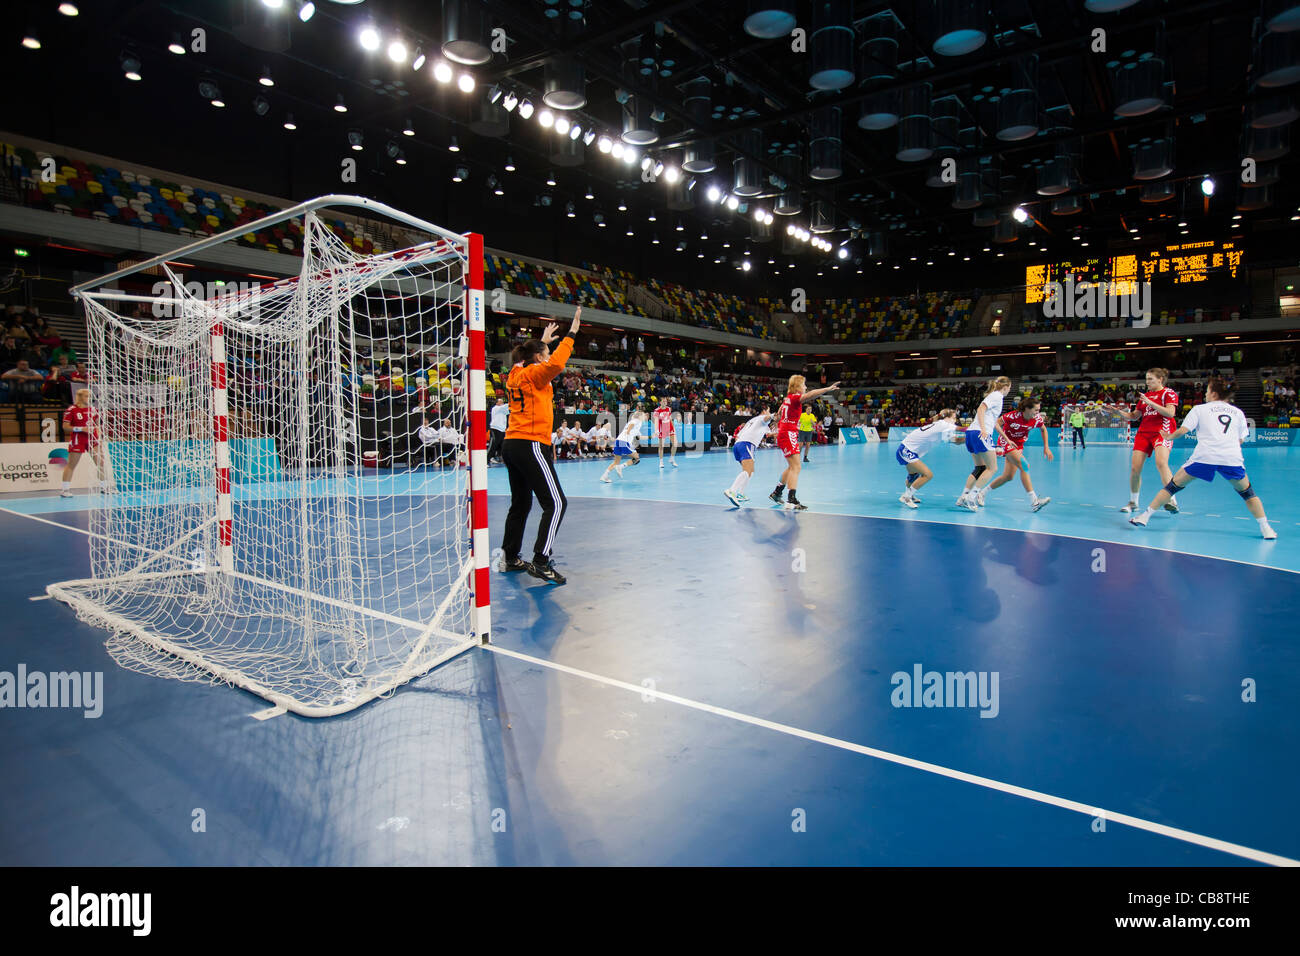 Zuzana SKOLKOVA (SVK), Pologne v La Slovaquie lors de la Coupe de handball de Londres de la femme. Tenue à l'Arène de handball, au Royaume-Uni. Banque D'Images